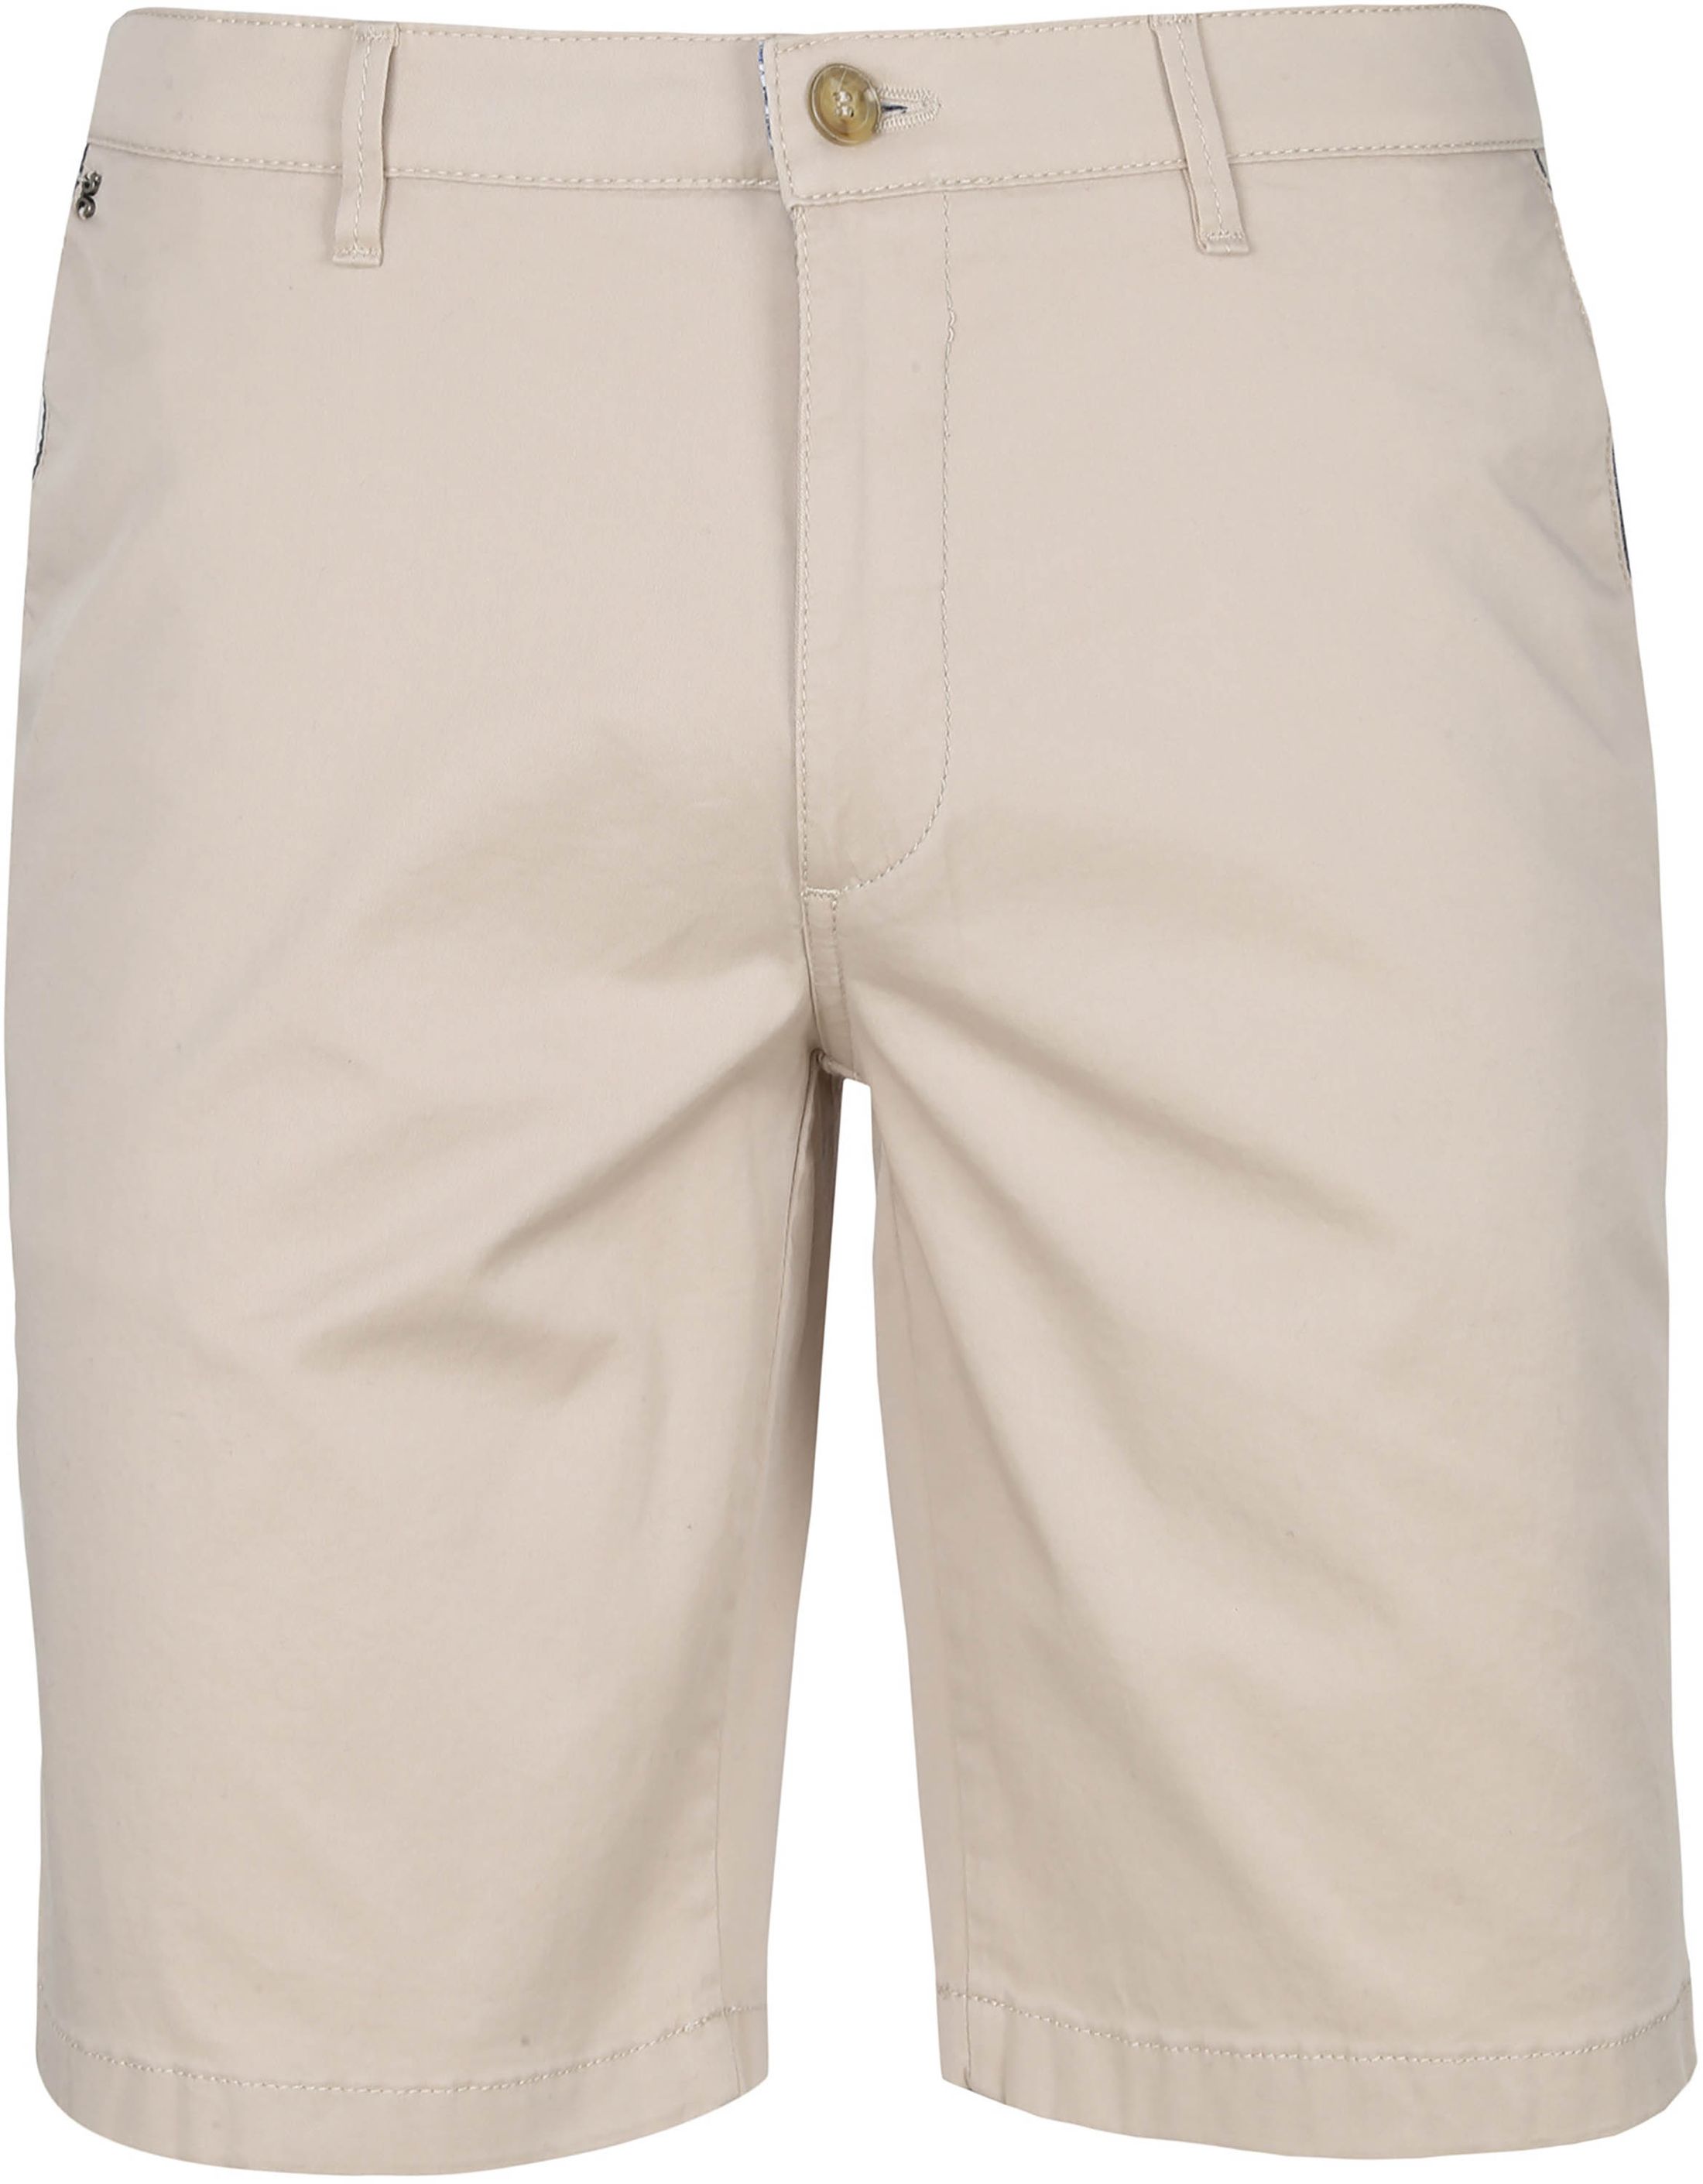 Gardeur Shorts Bermuda Jasper Beige size W 32/33